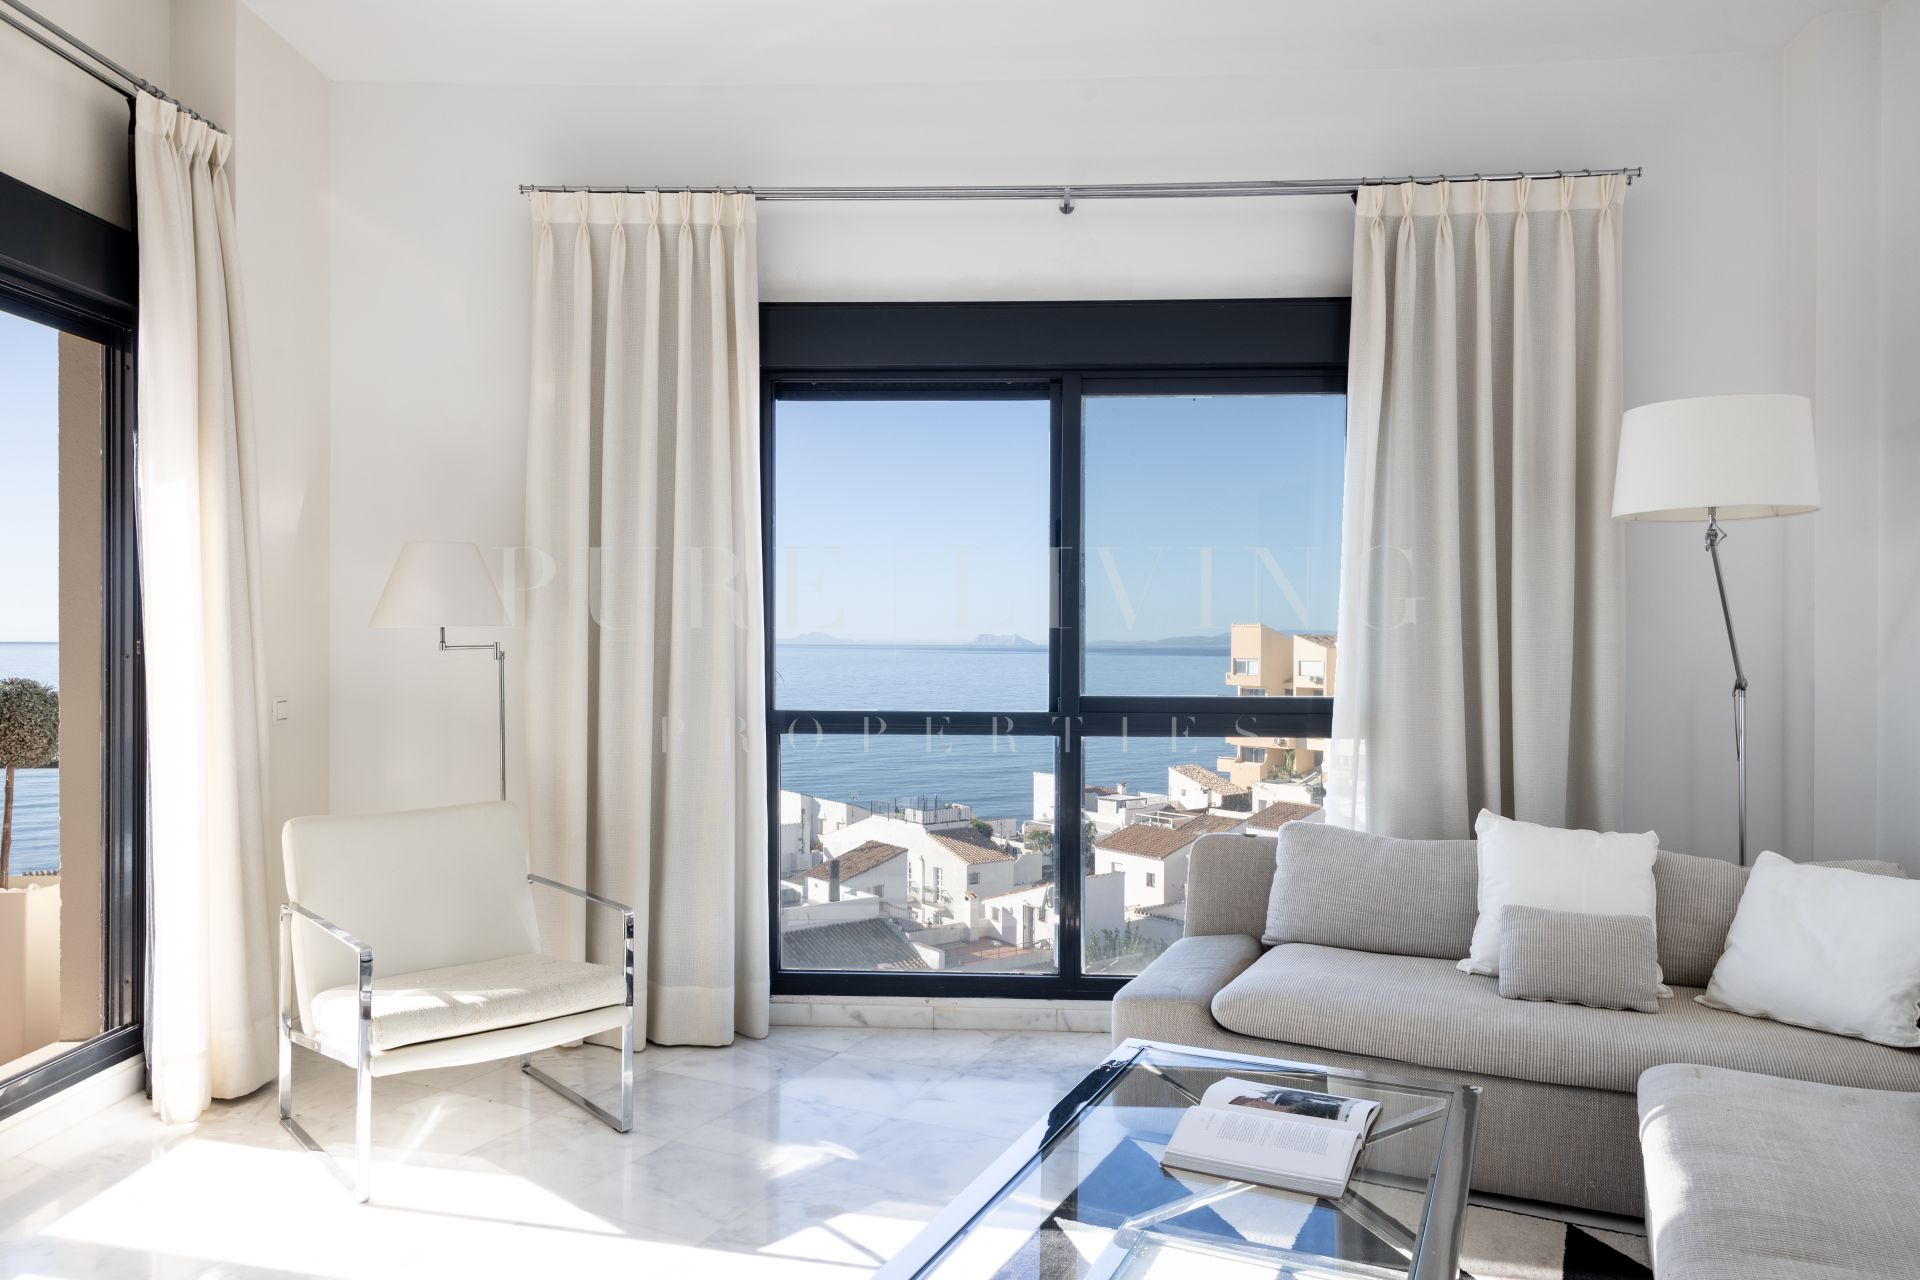 Stunning frontline beach three bedroom Penthouse in Guadalmansa, Estepona